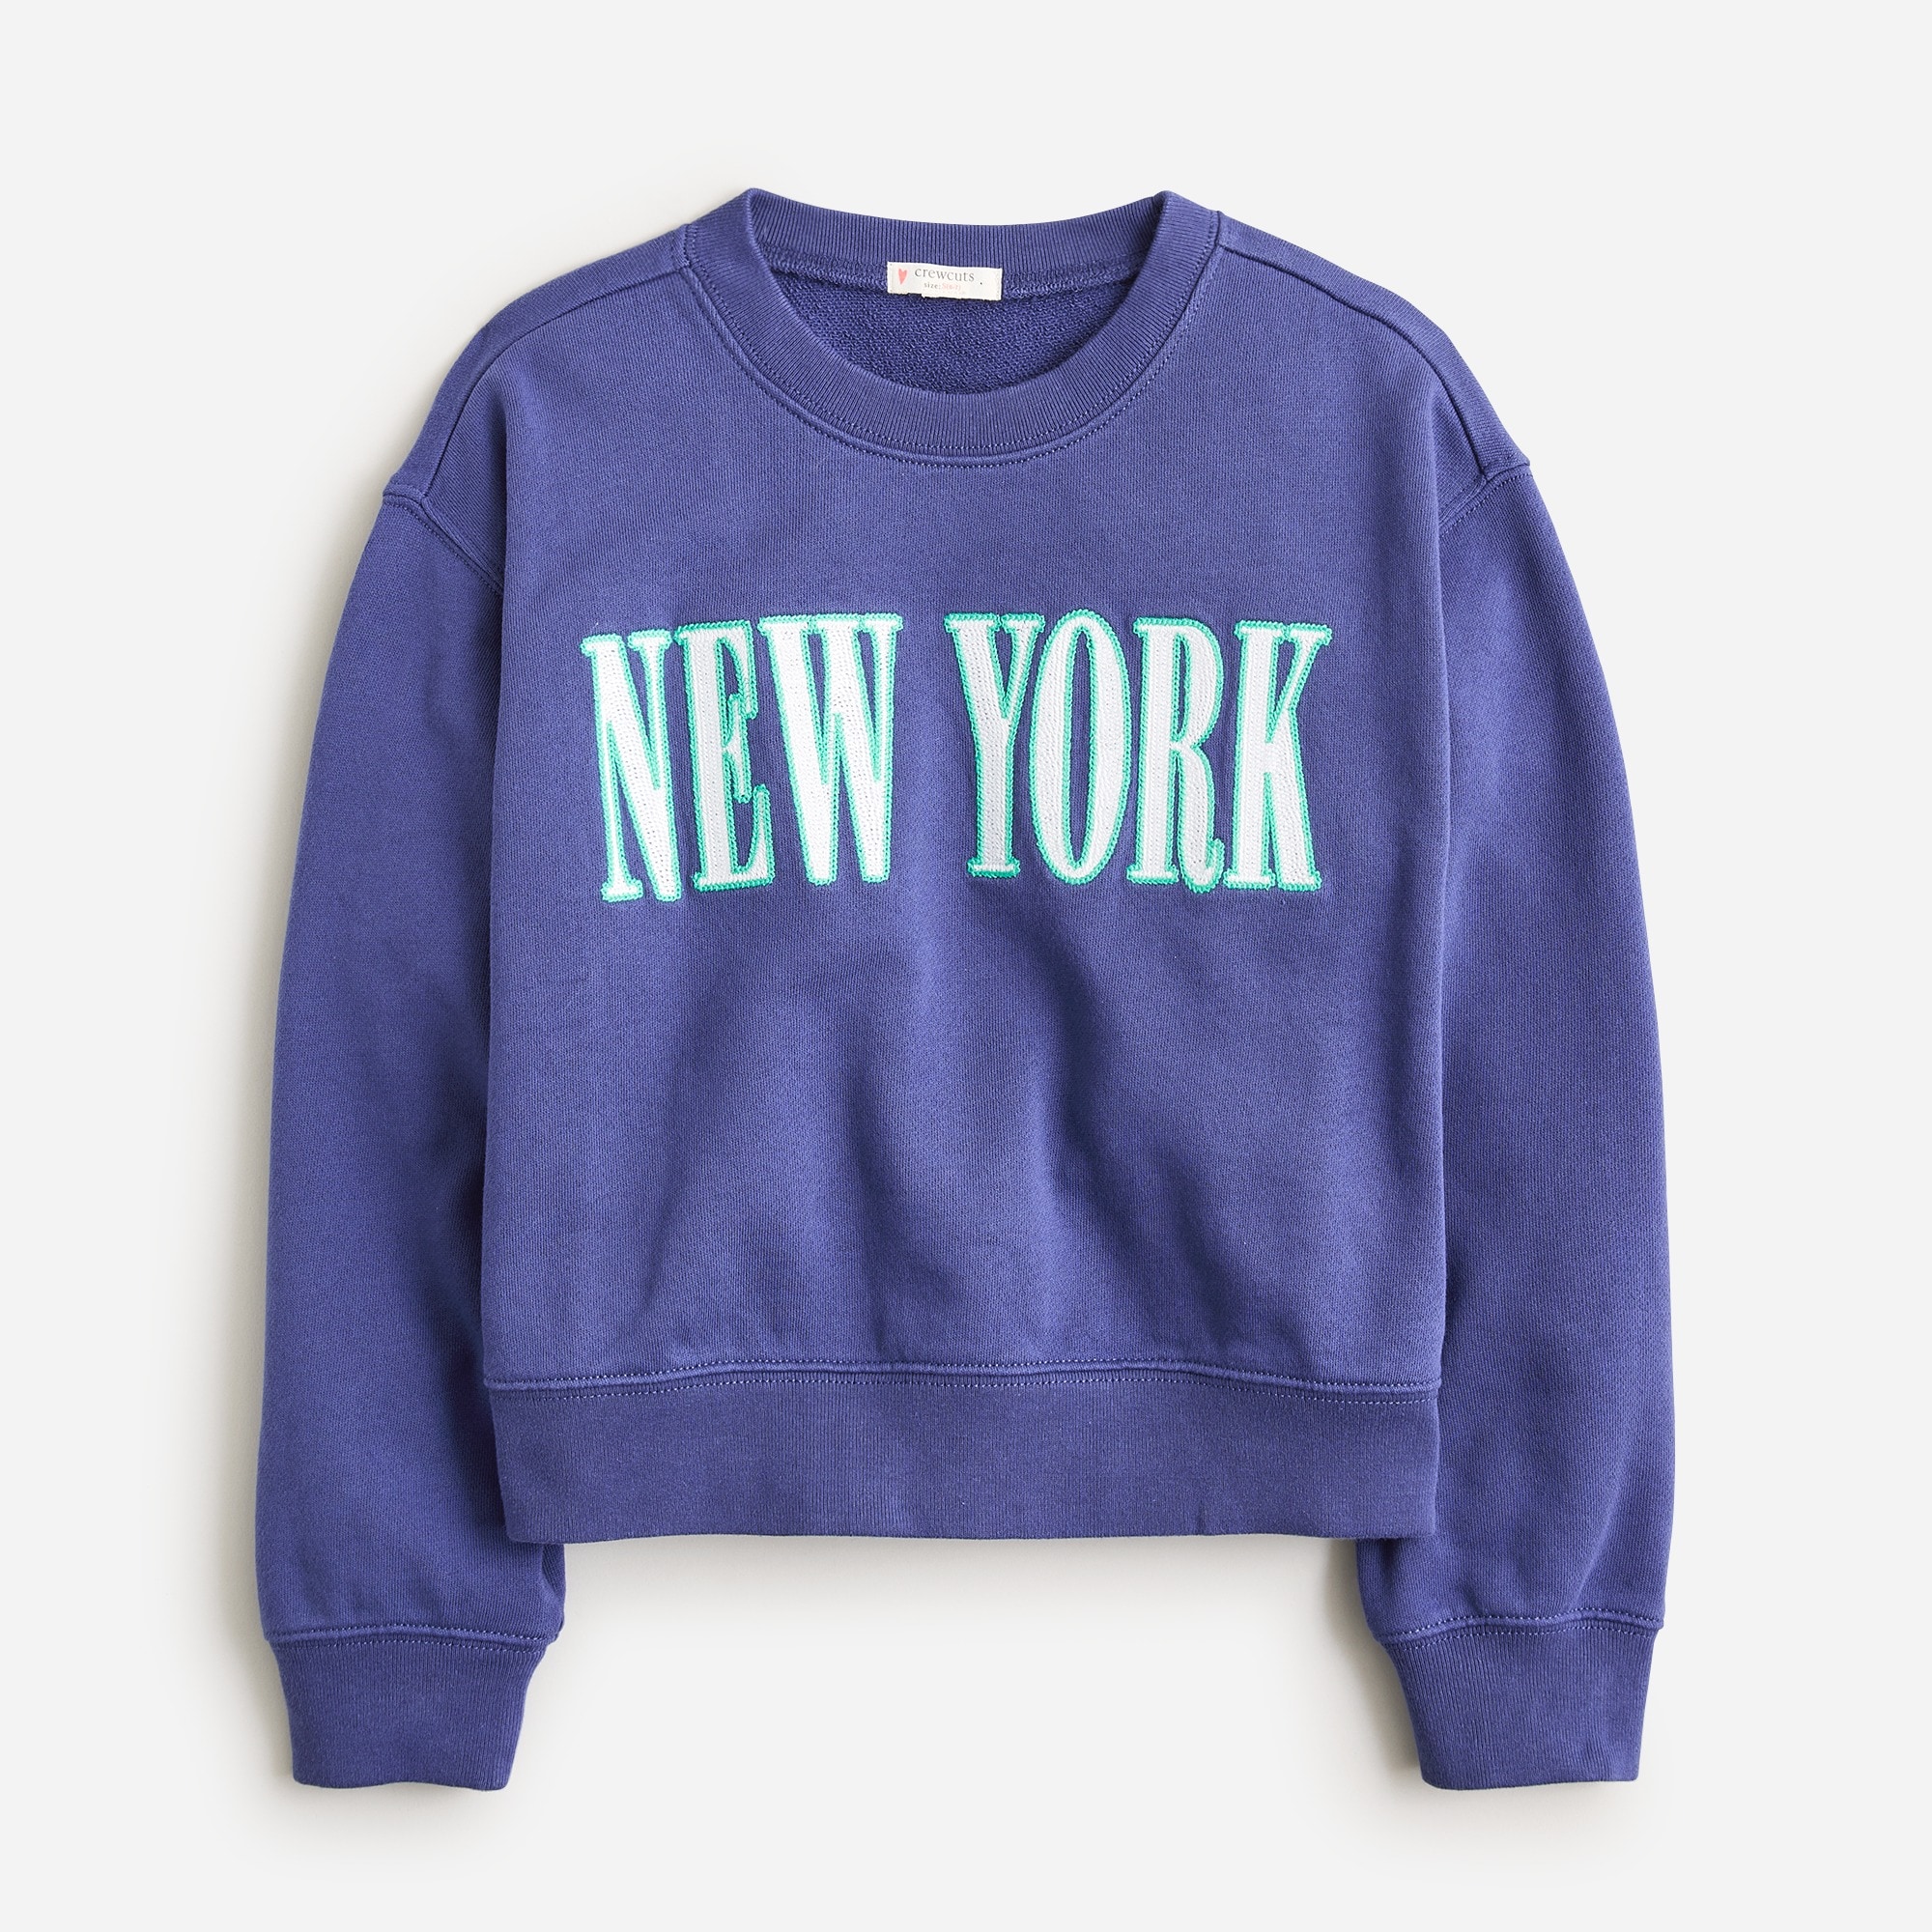  Kids' embroidered New York graphic crewneck sweatshirt